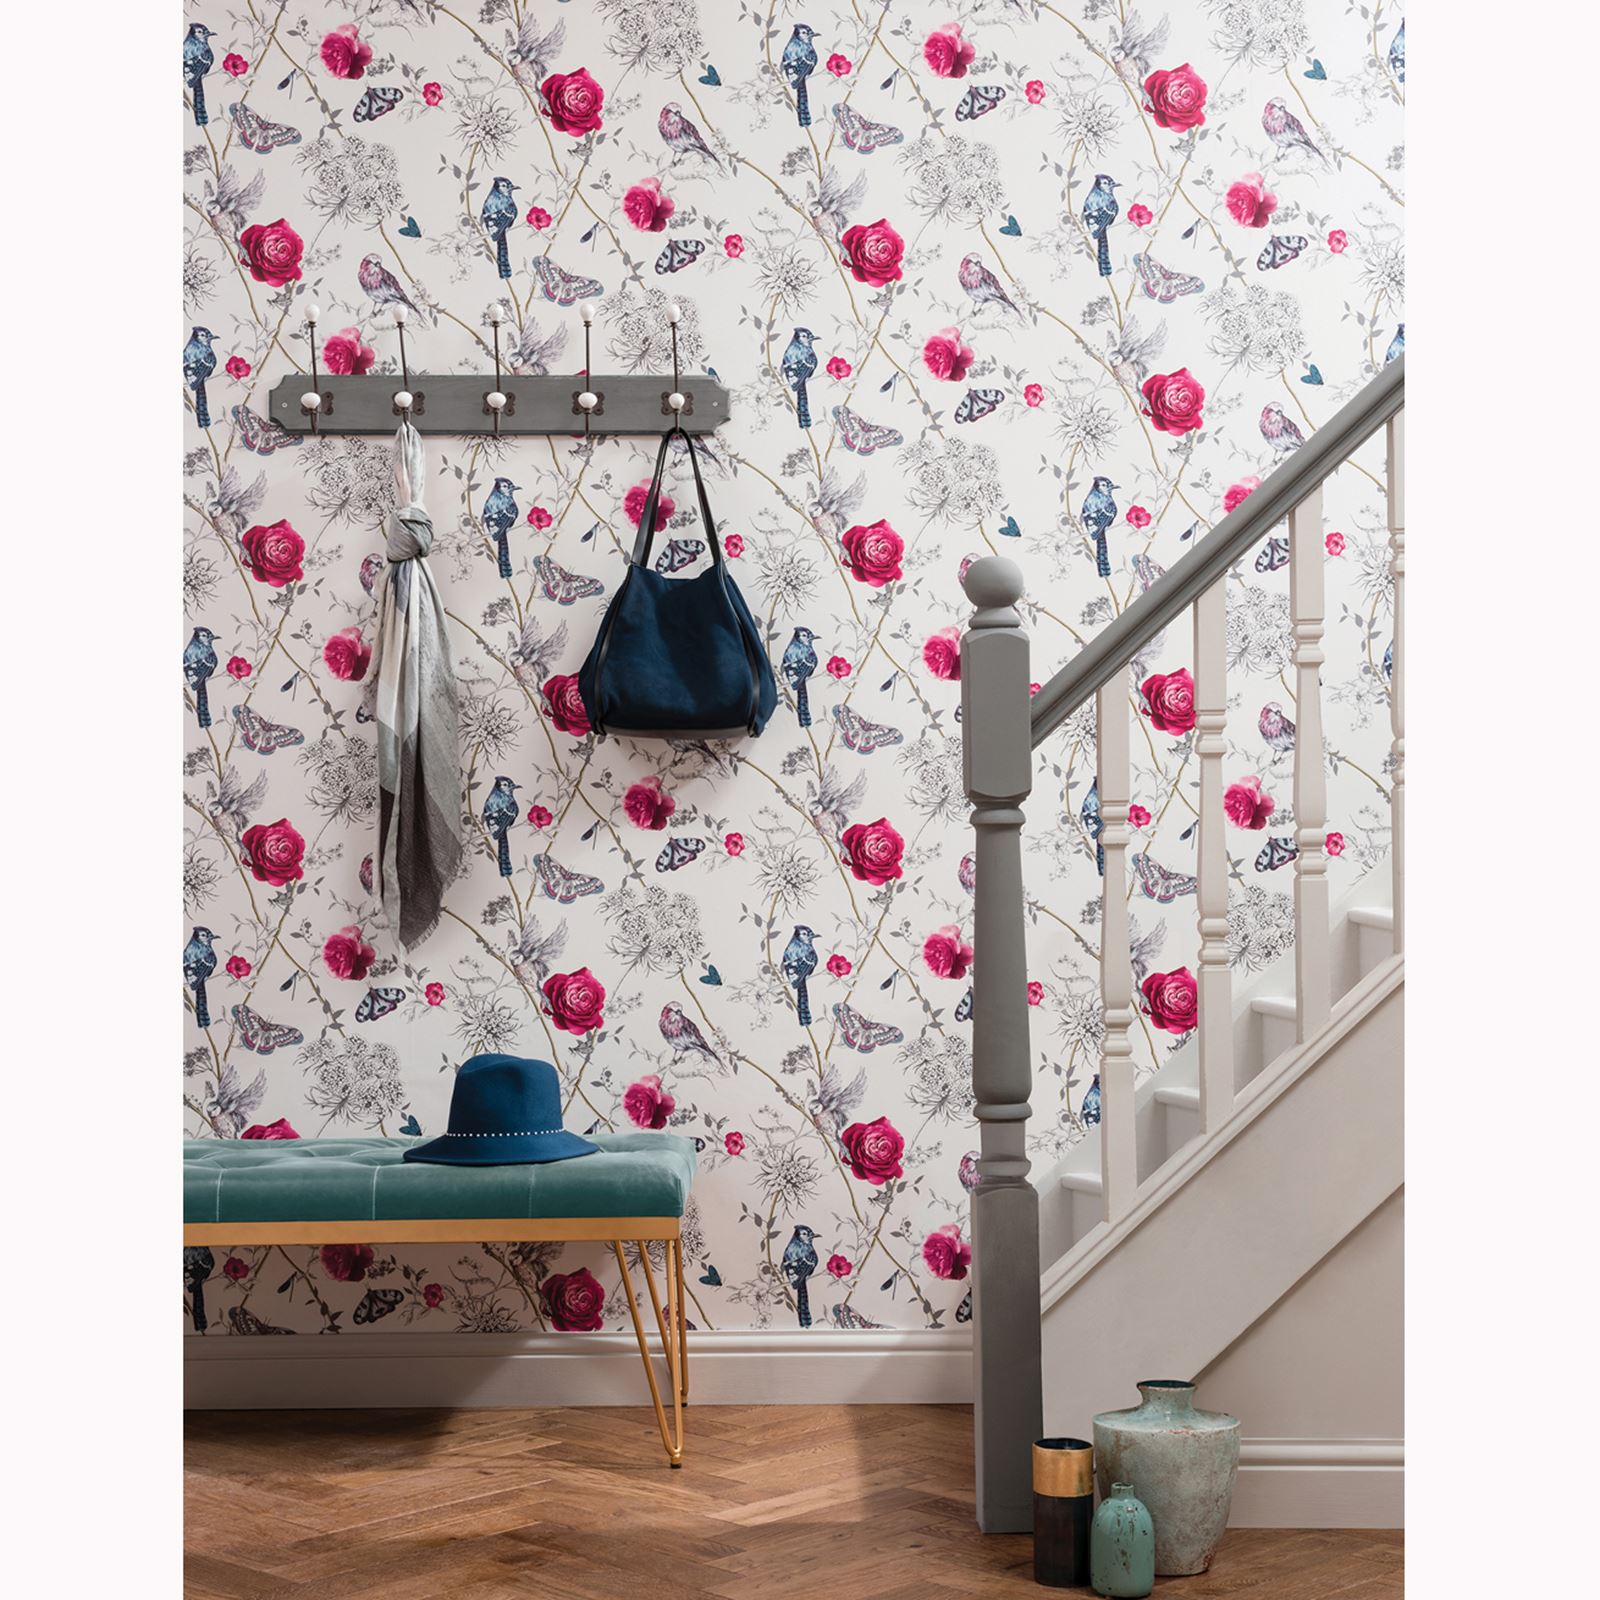 tottenham wallpaper for bedrooms,product,wall,wallpaper,furniture,pink